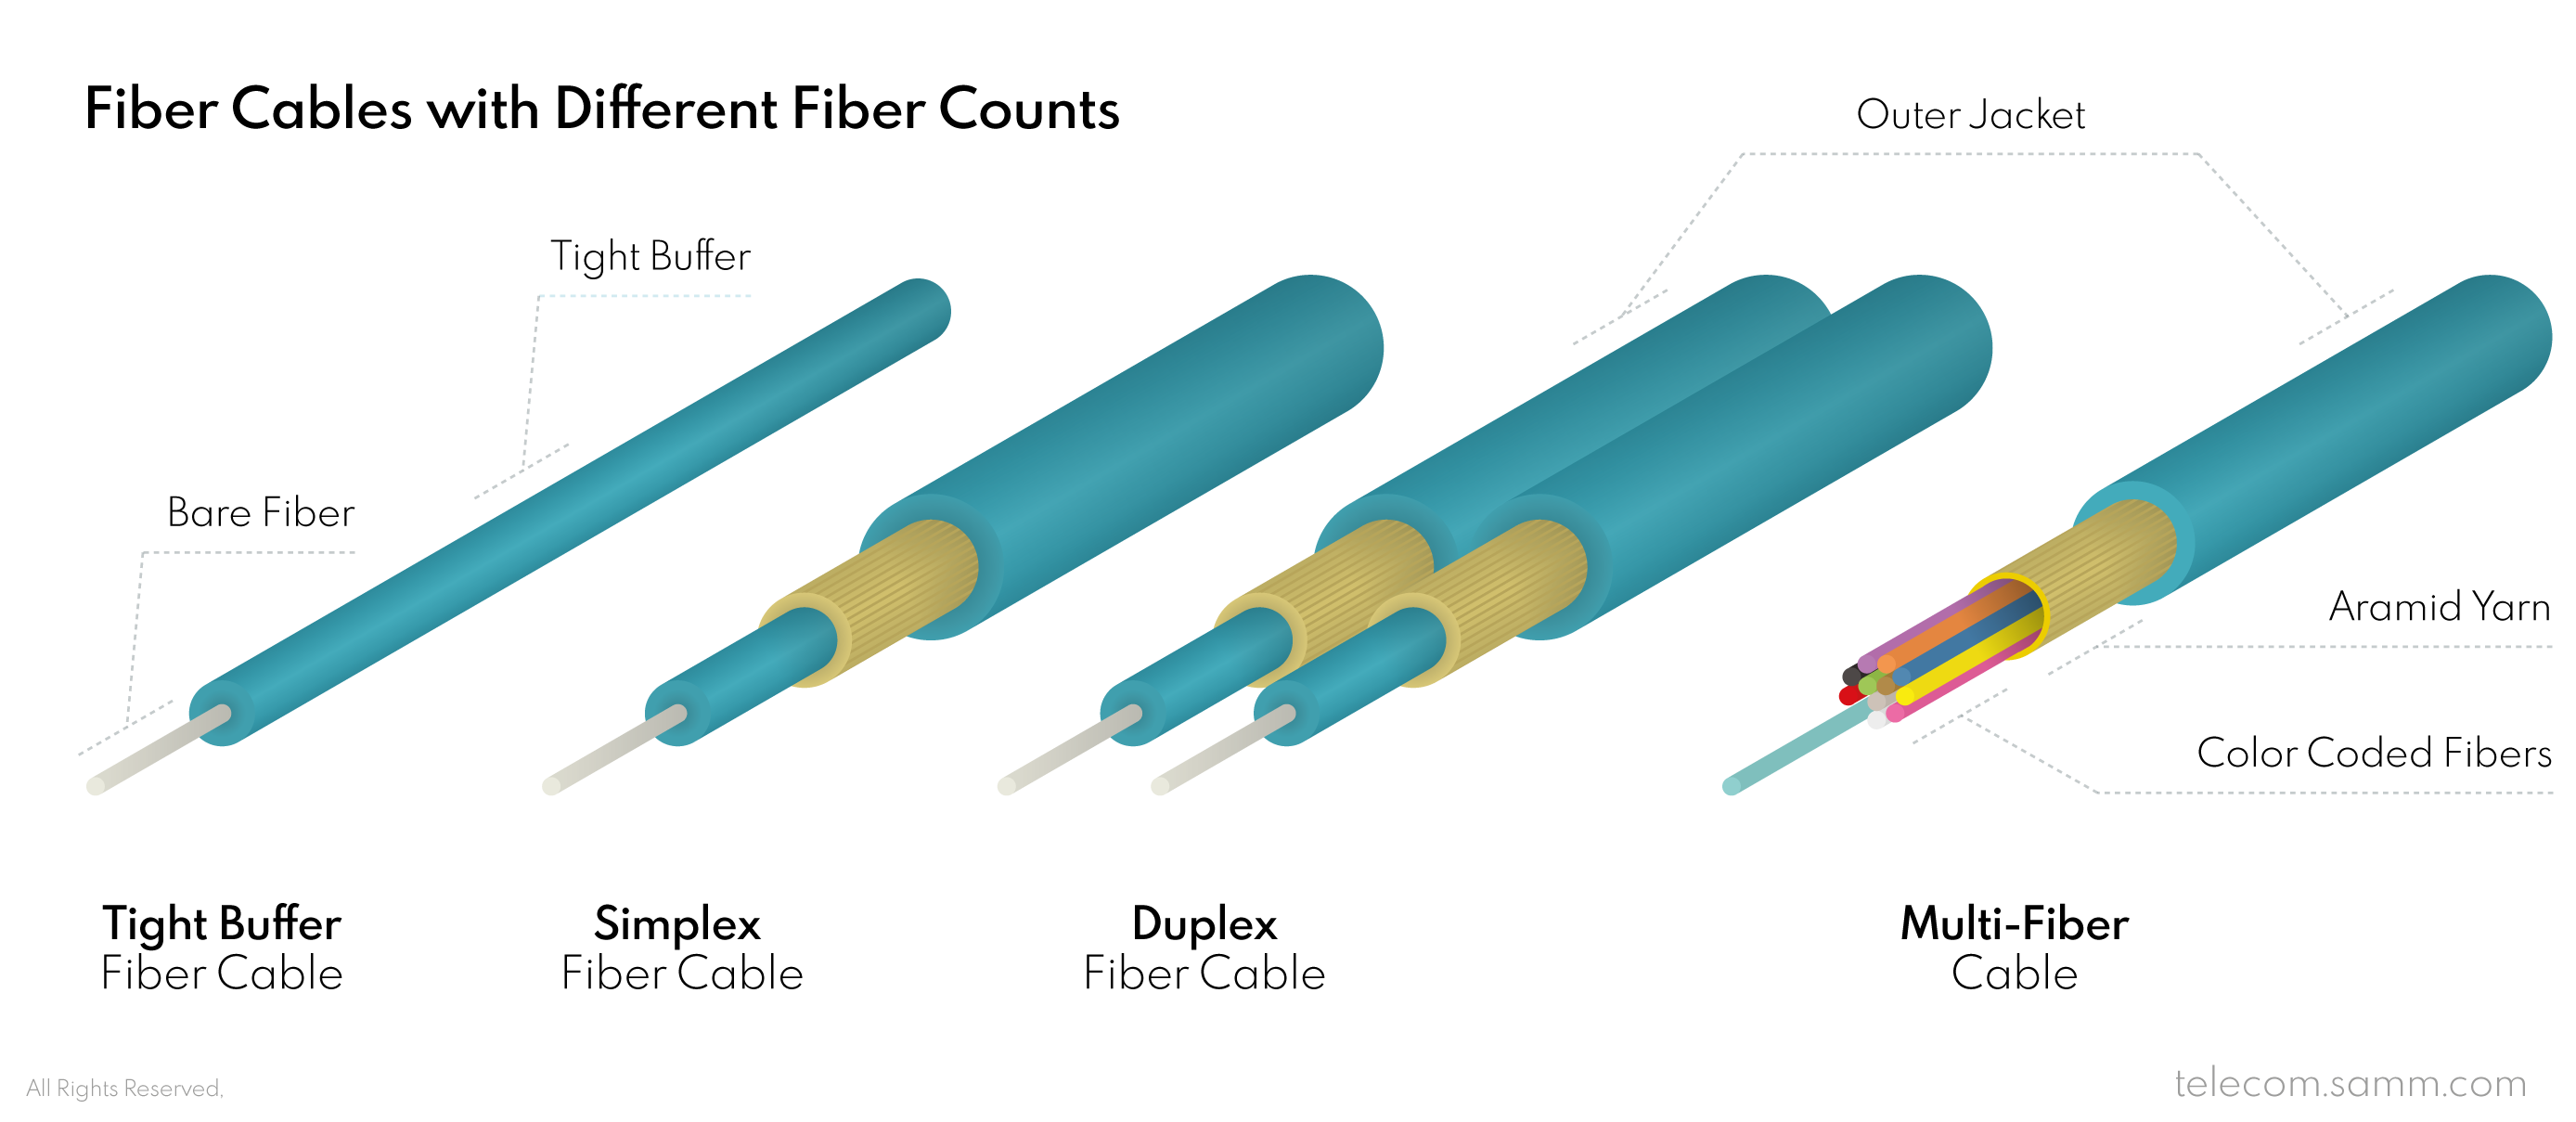 Fiber Cables with Different Fiber Counts